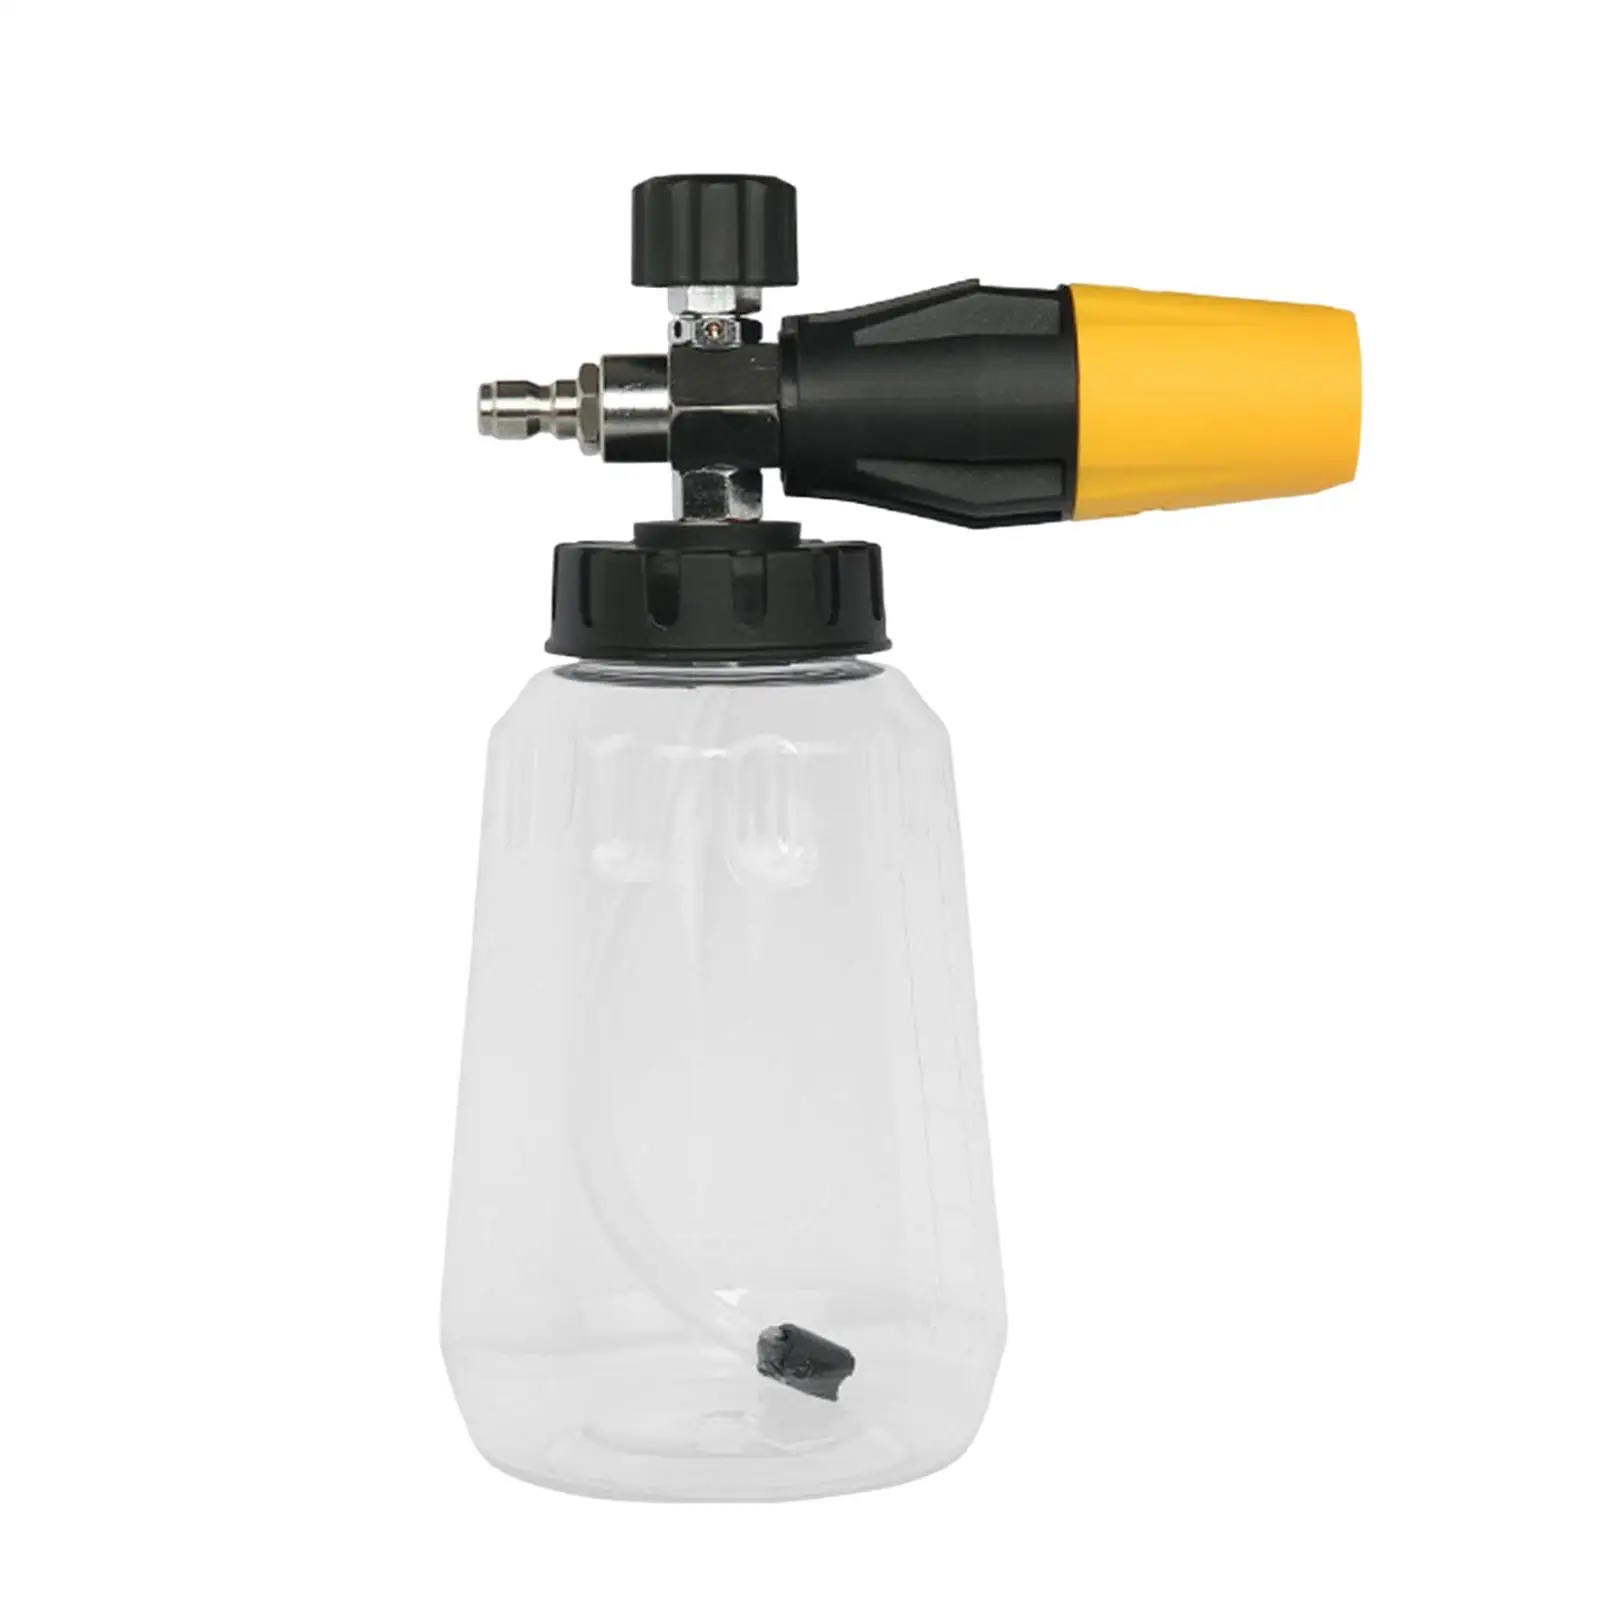 1 Wash Foam Sprayer, Foam Cars Watering Washing Tool Garden Water Bottle Tools Adjustable Cleaner for